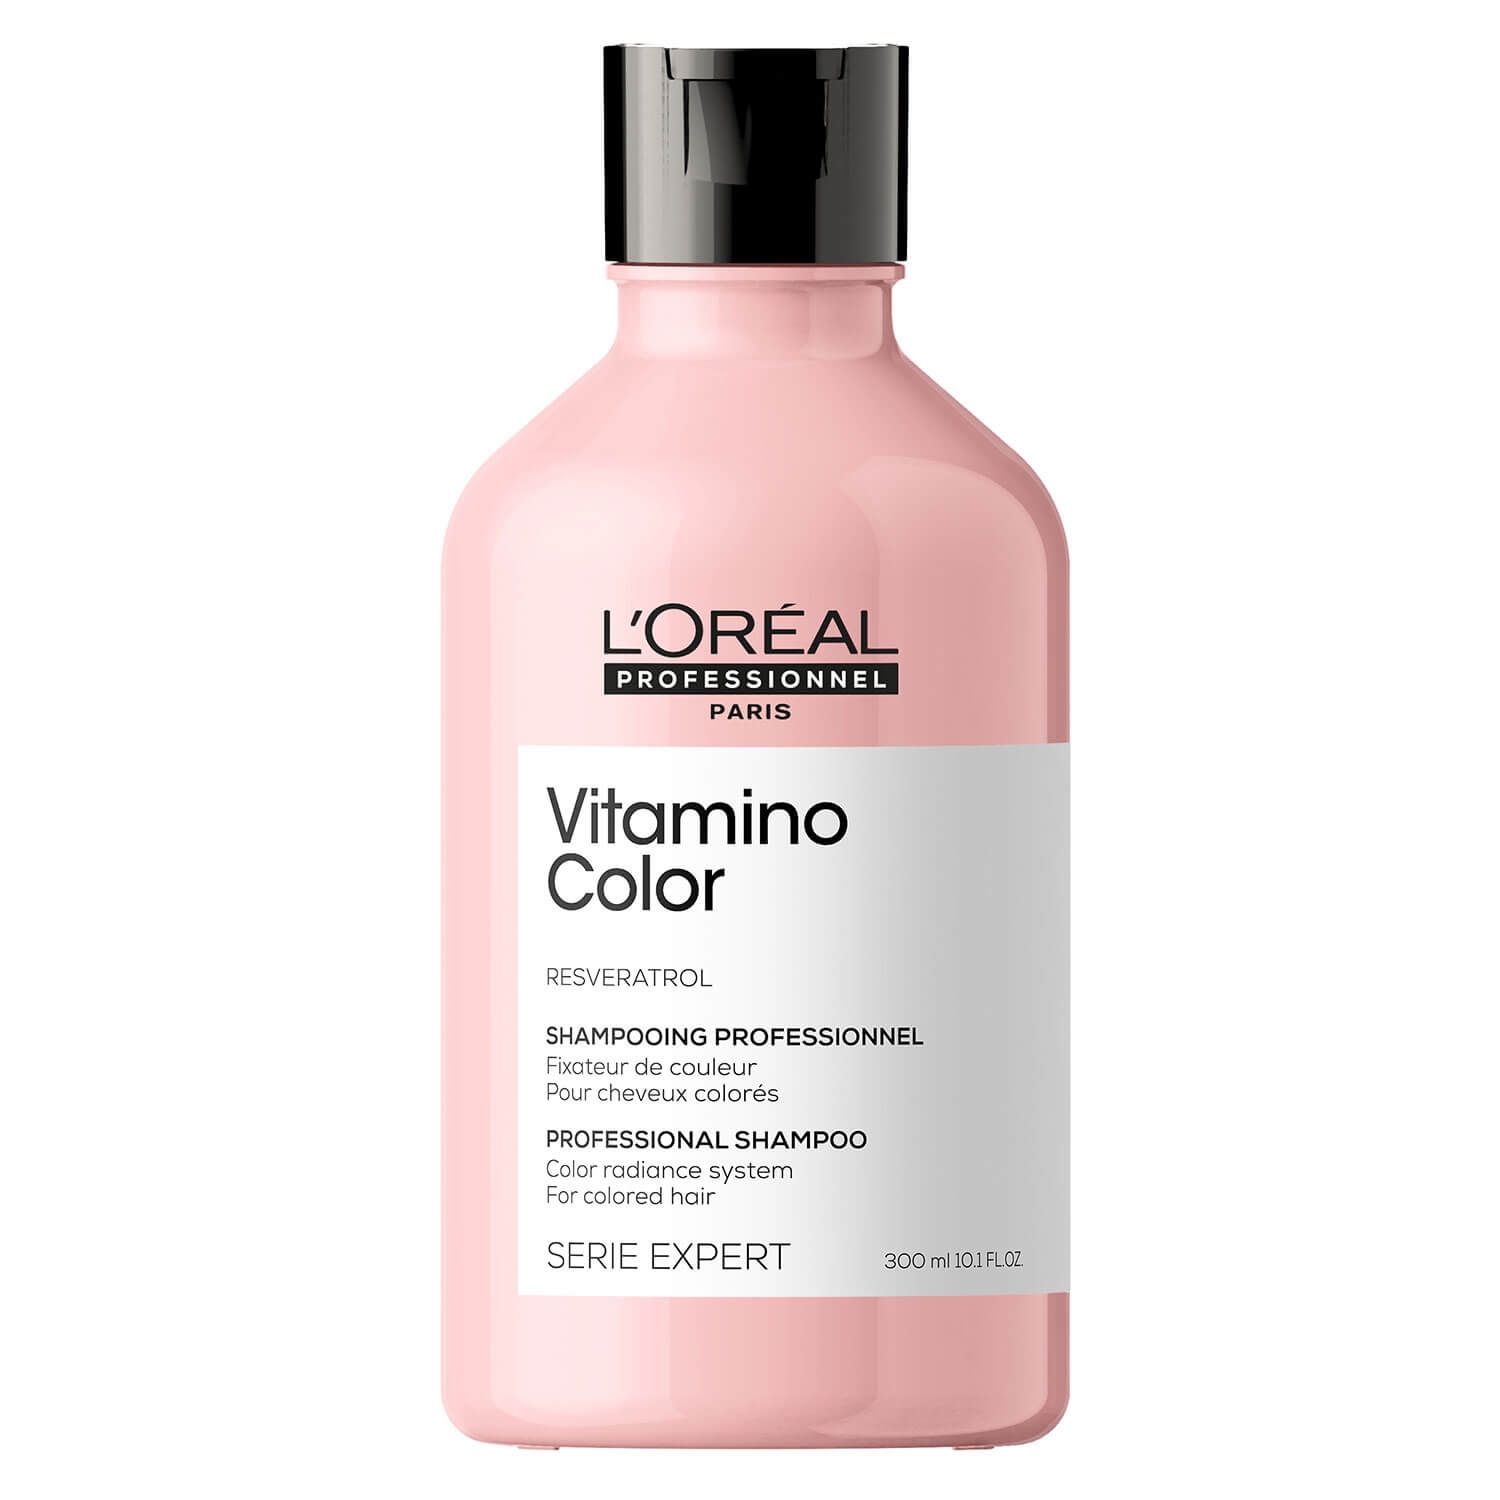 Produktbild von Série Expert Vitamino Color - Professional Shampoo